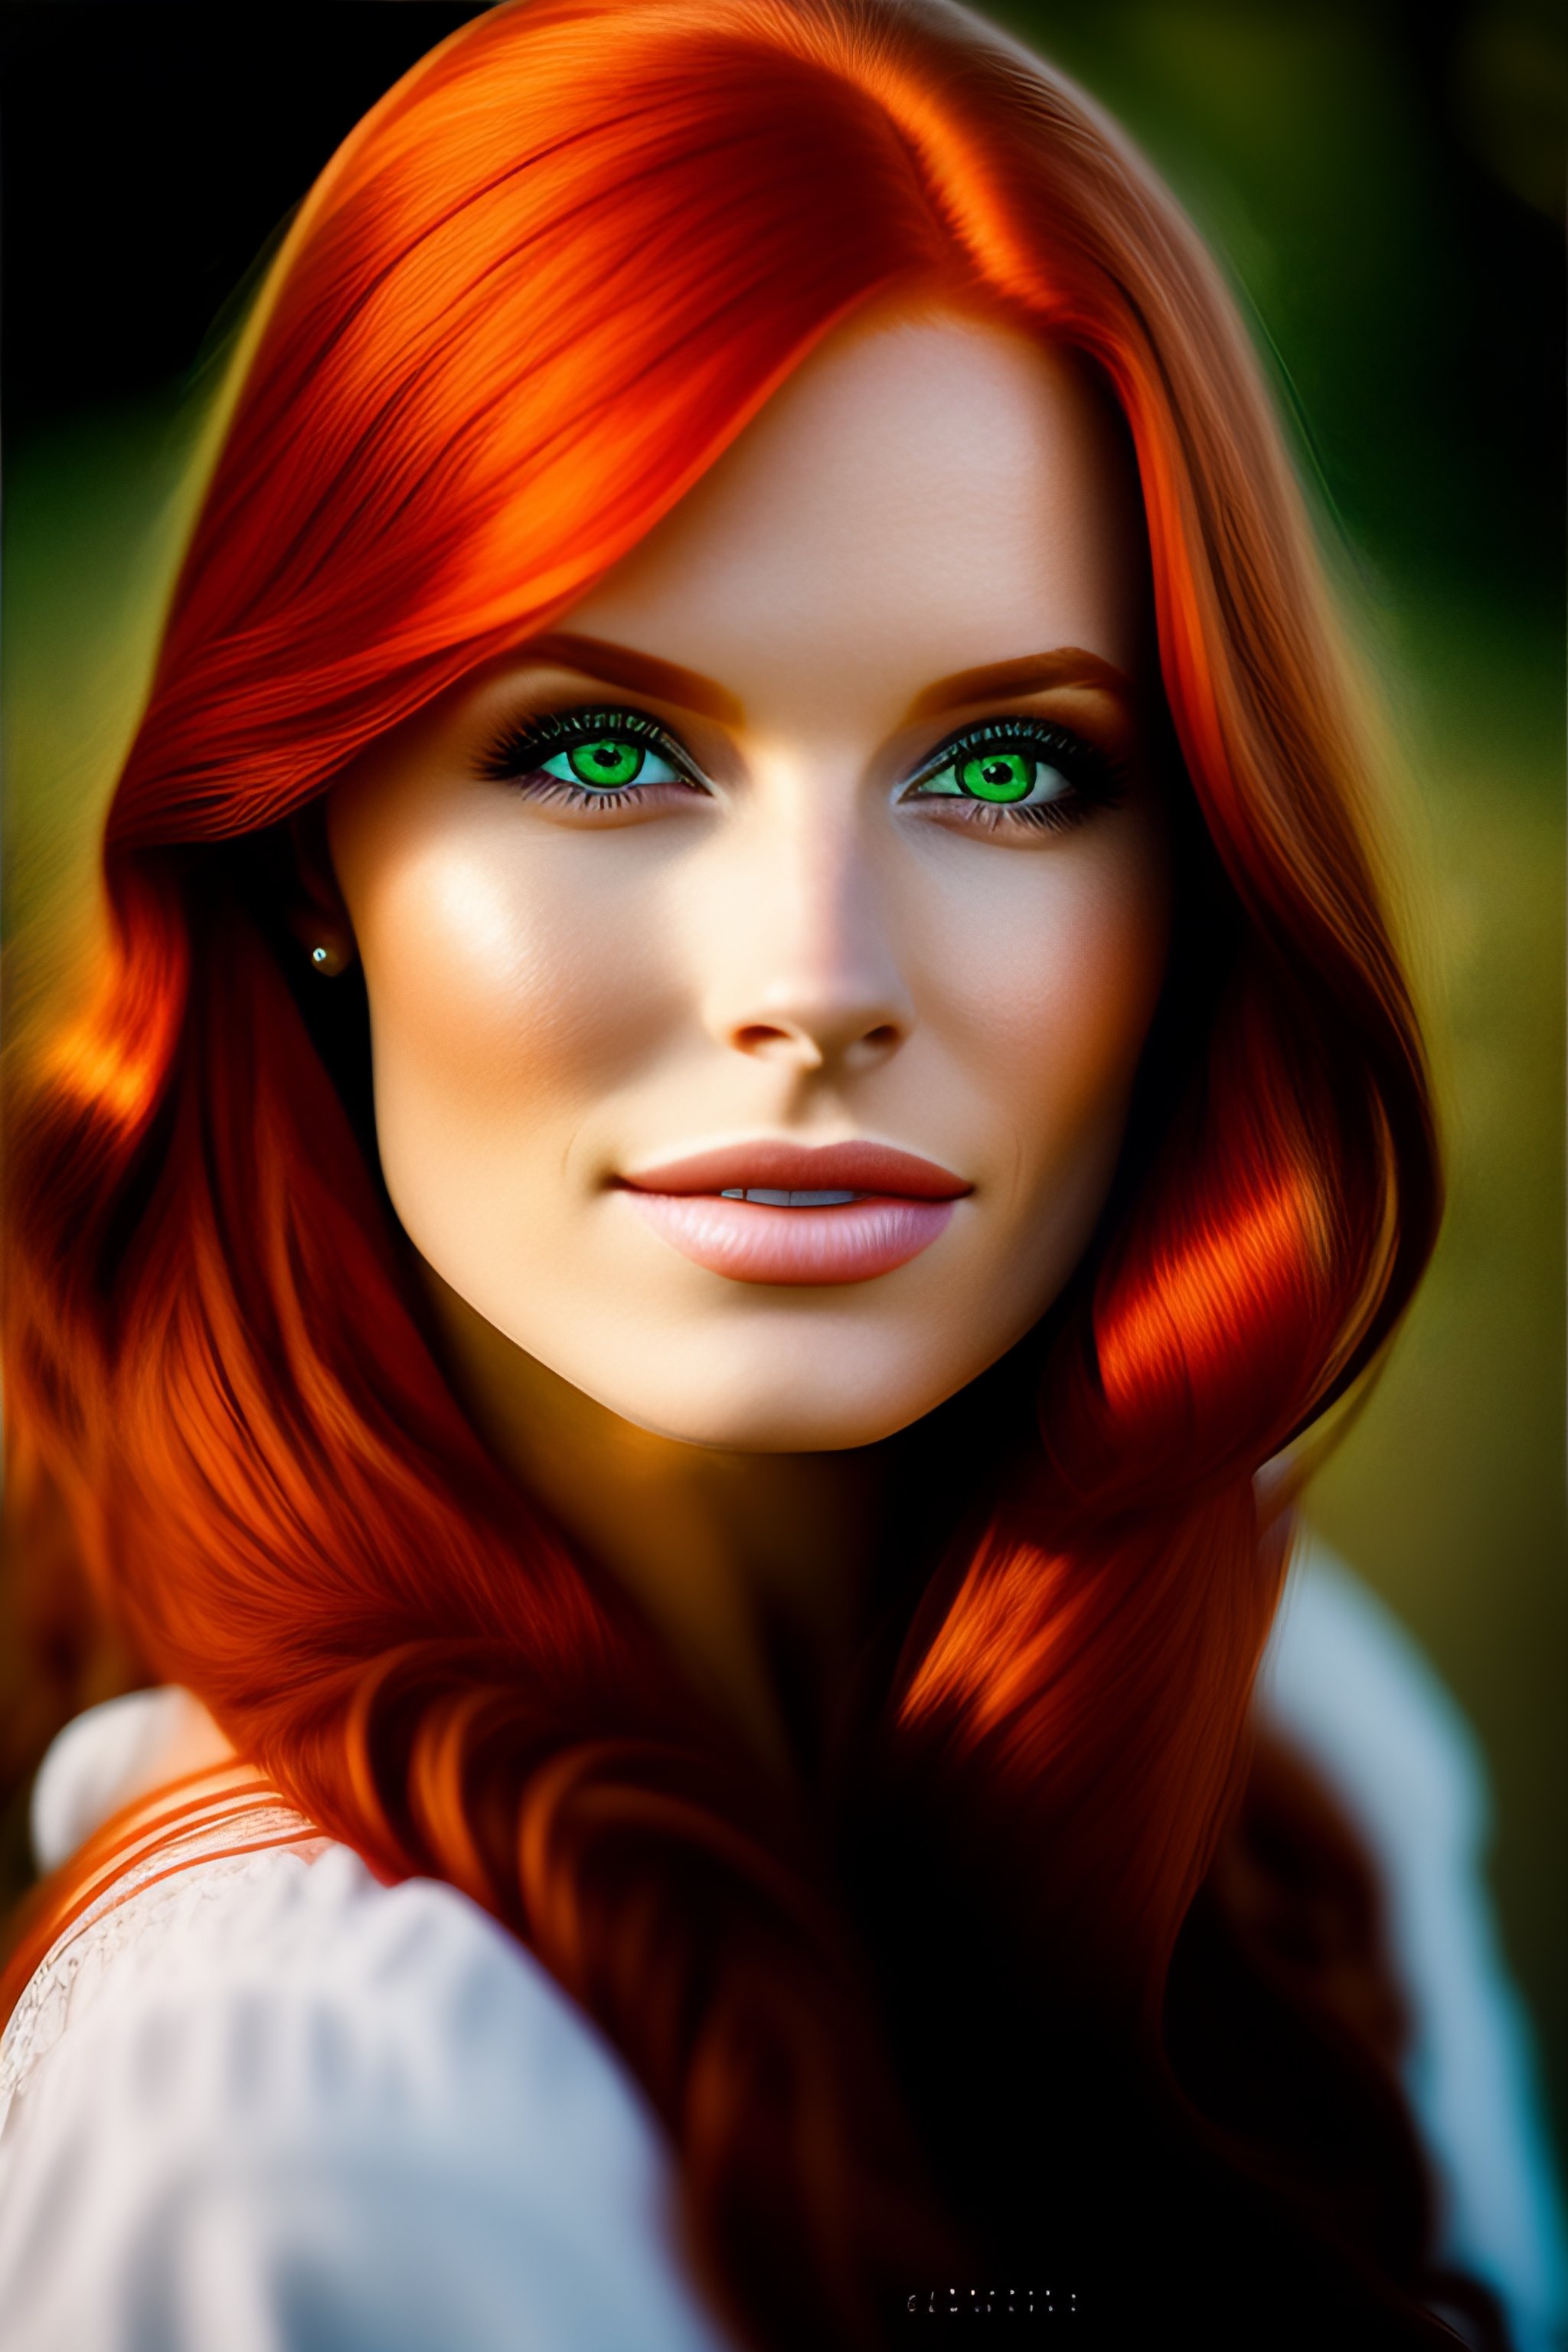 christina mariani add photo redhead woman with green eyes